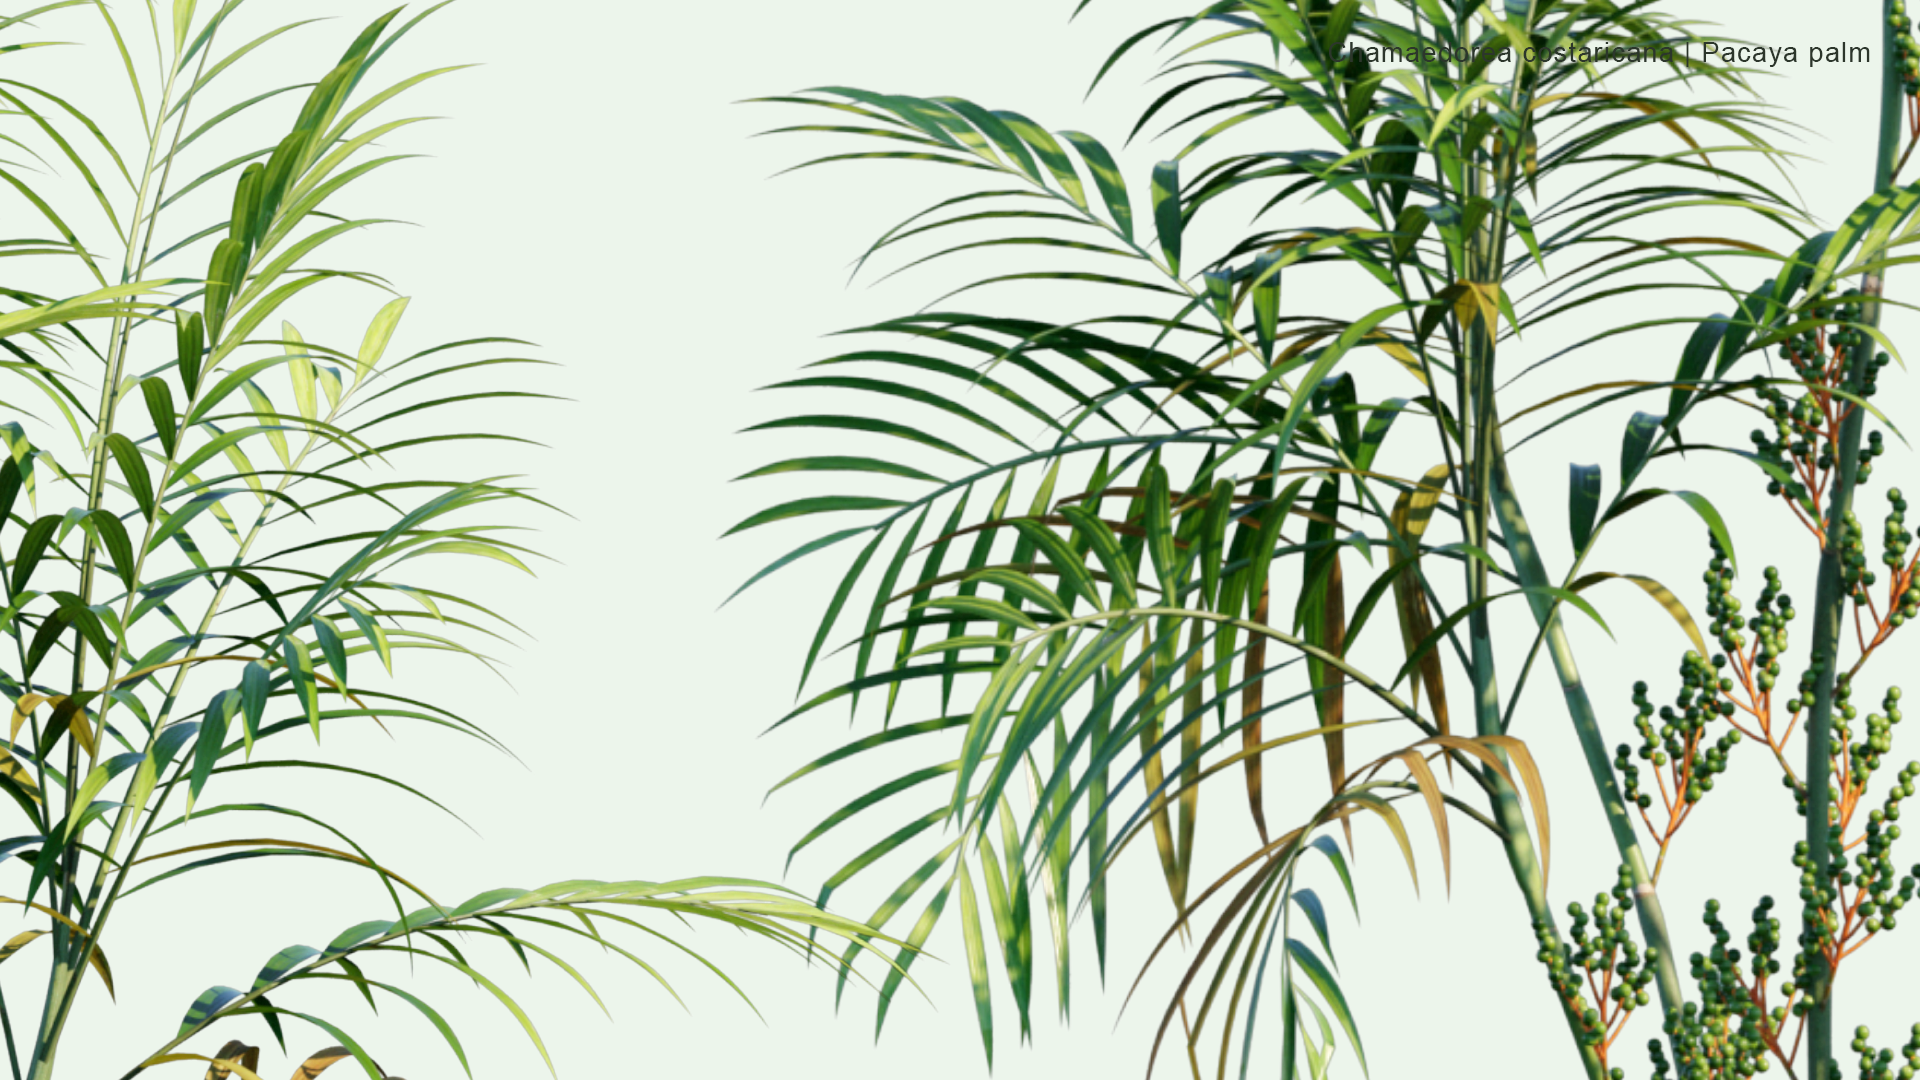 2D Chamaedorea Costaricana - Pacaya Palm, Costa Rica Bamboo Palm